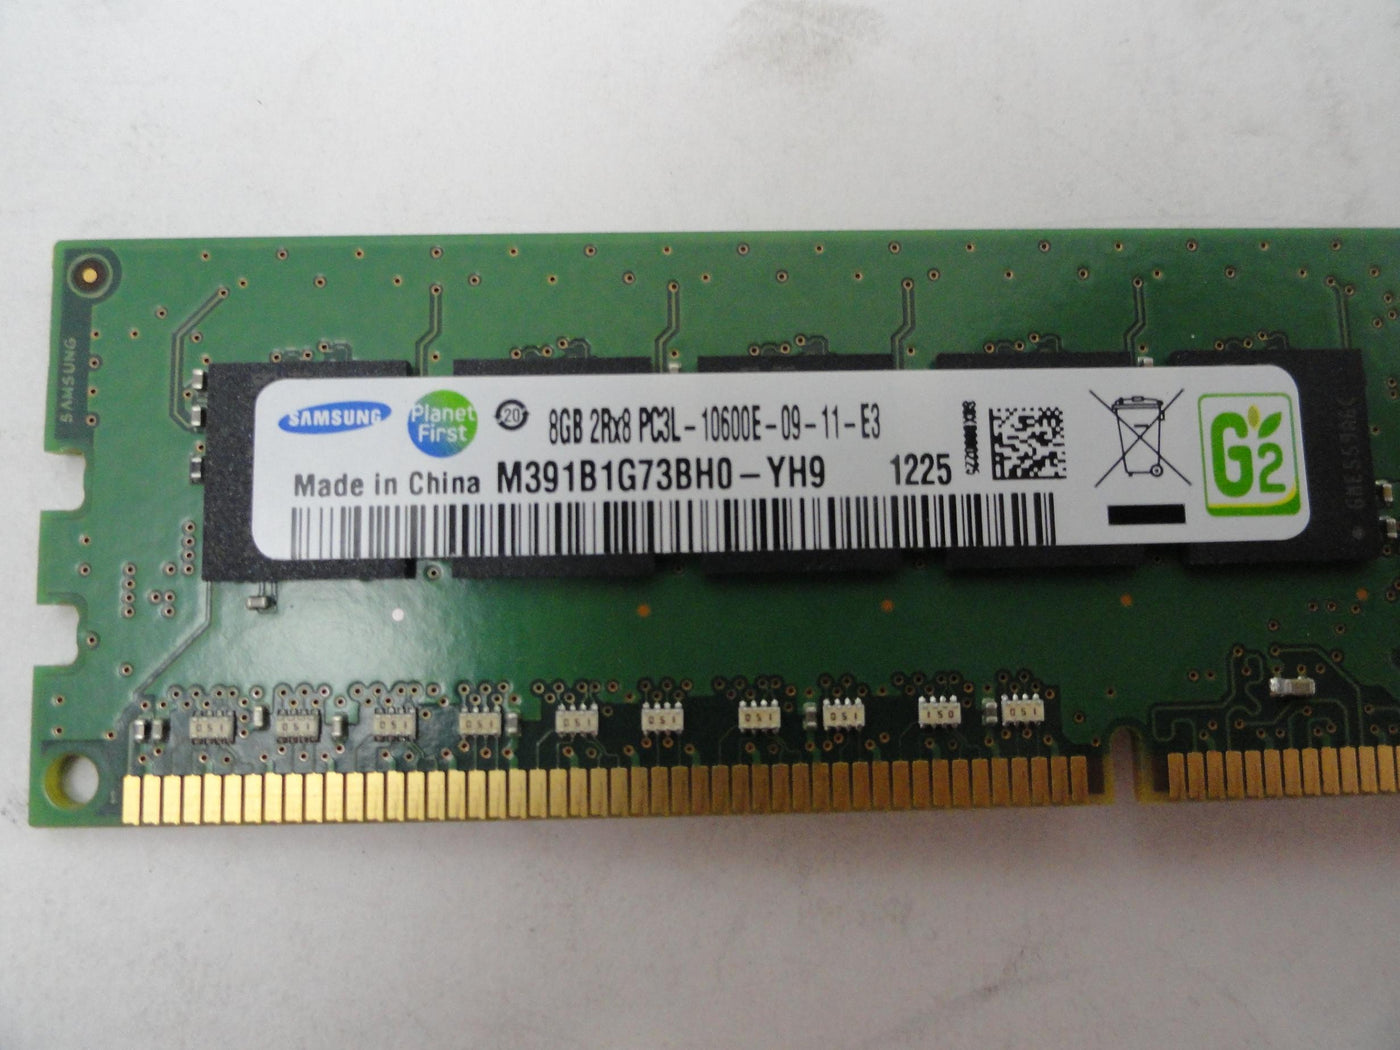 PR16813_0A65718_Lenovo 8Gb PC3-10600 DDR3-1333 ECC UDIMM RAM - Image2